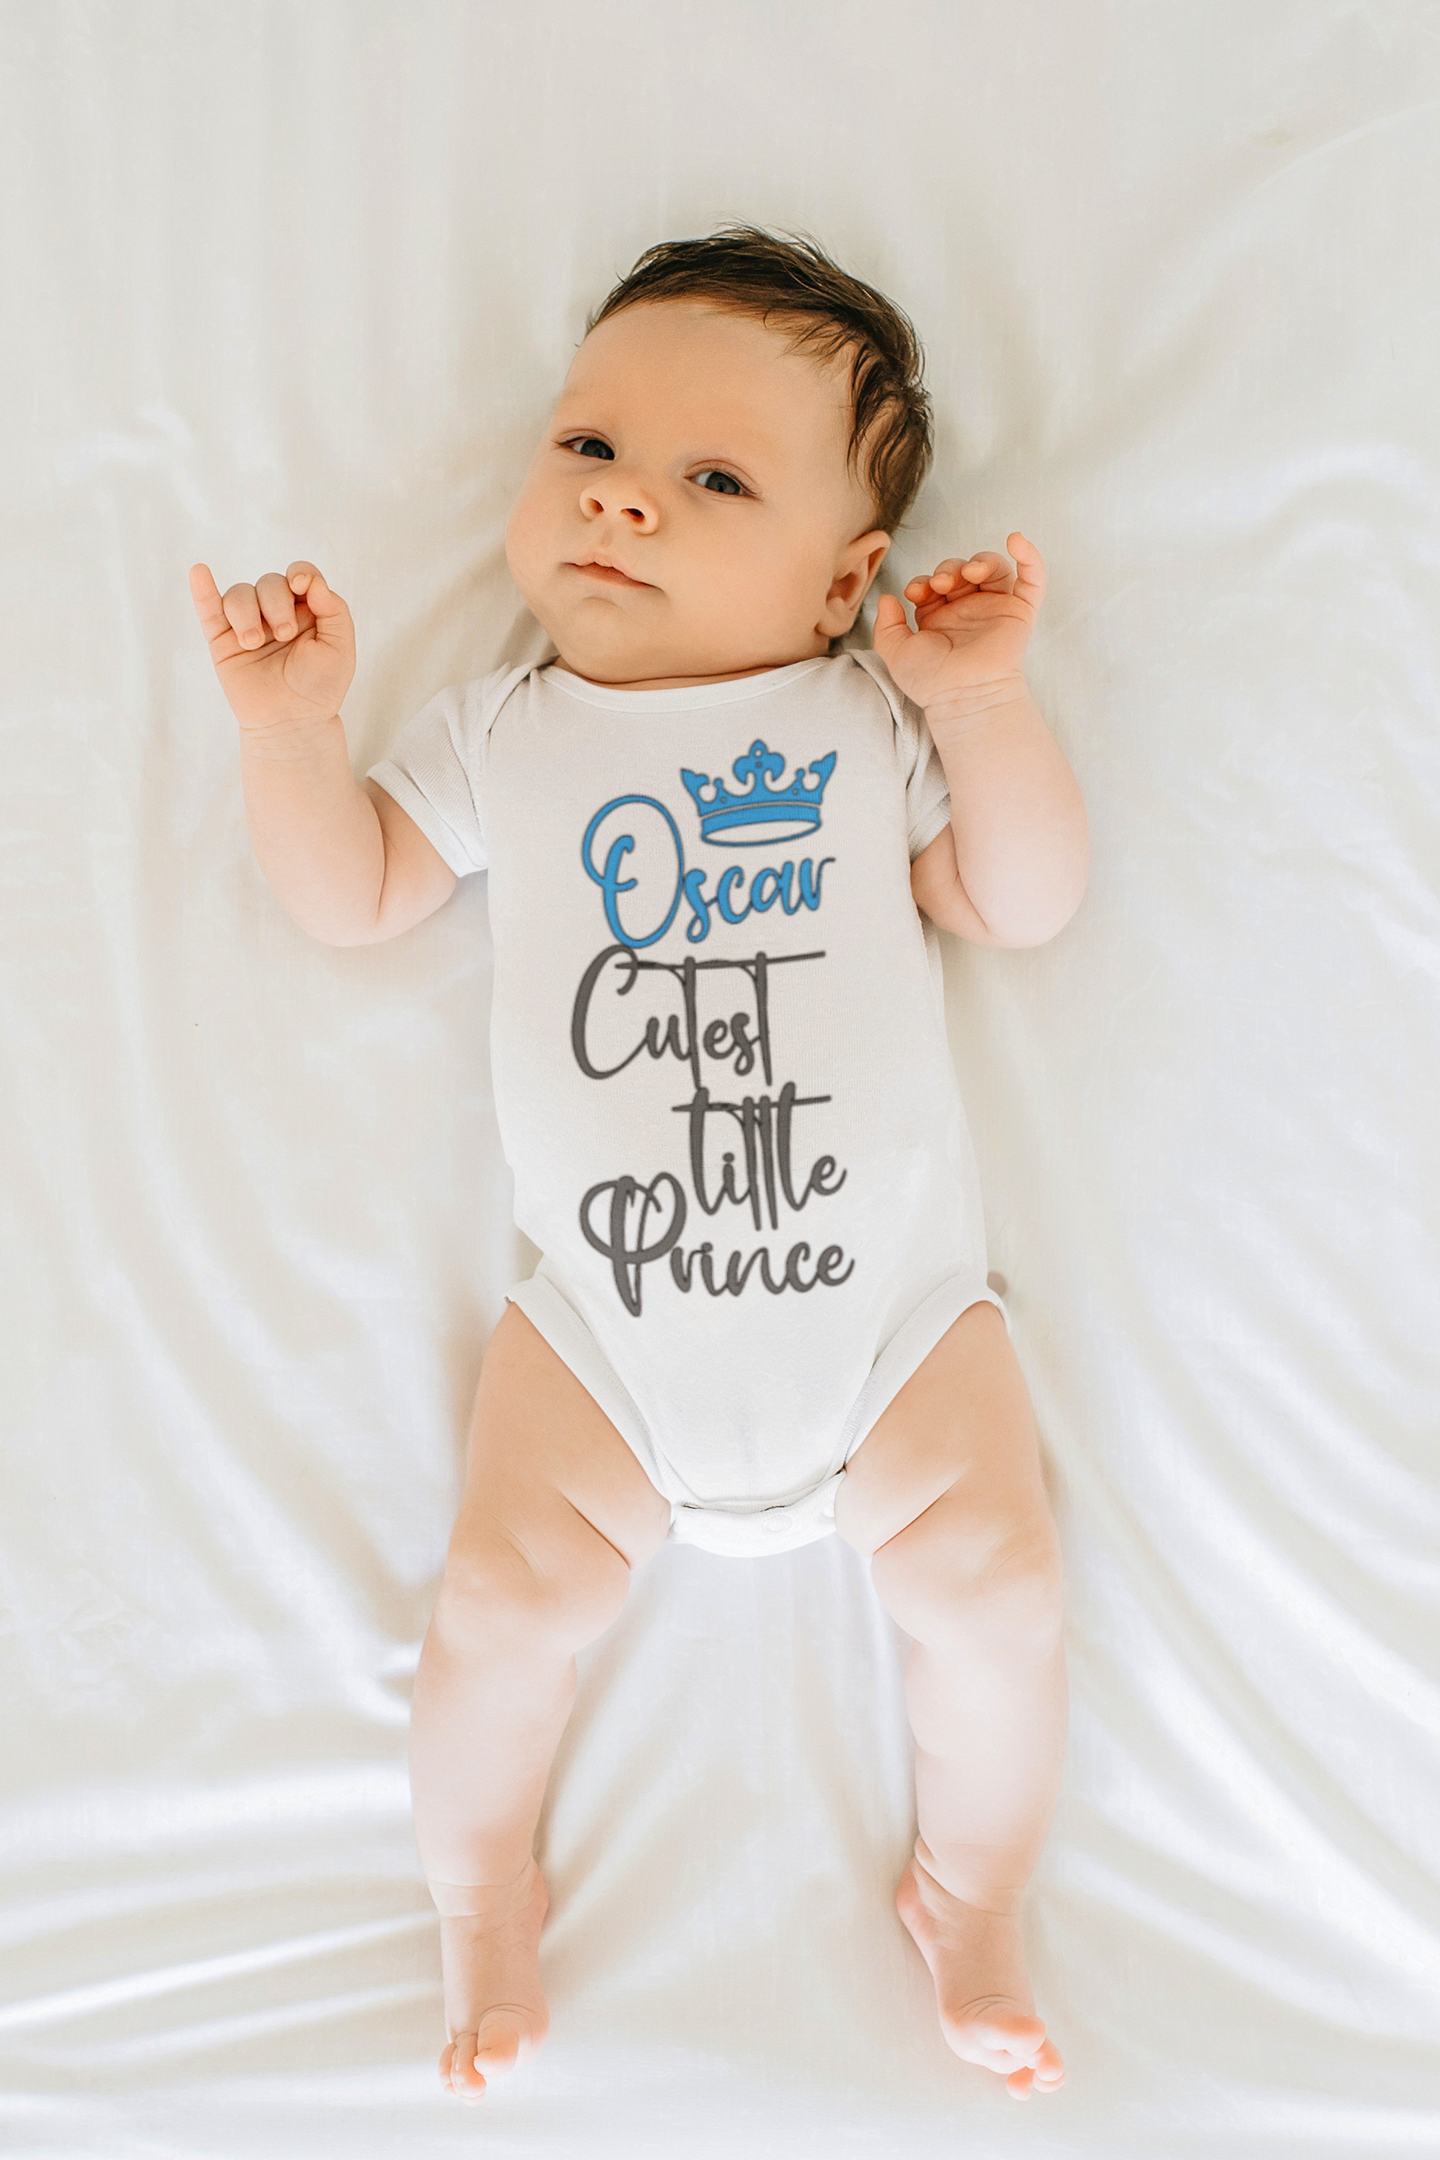 Prince/Princess Baby Vest